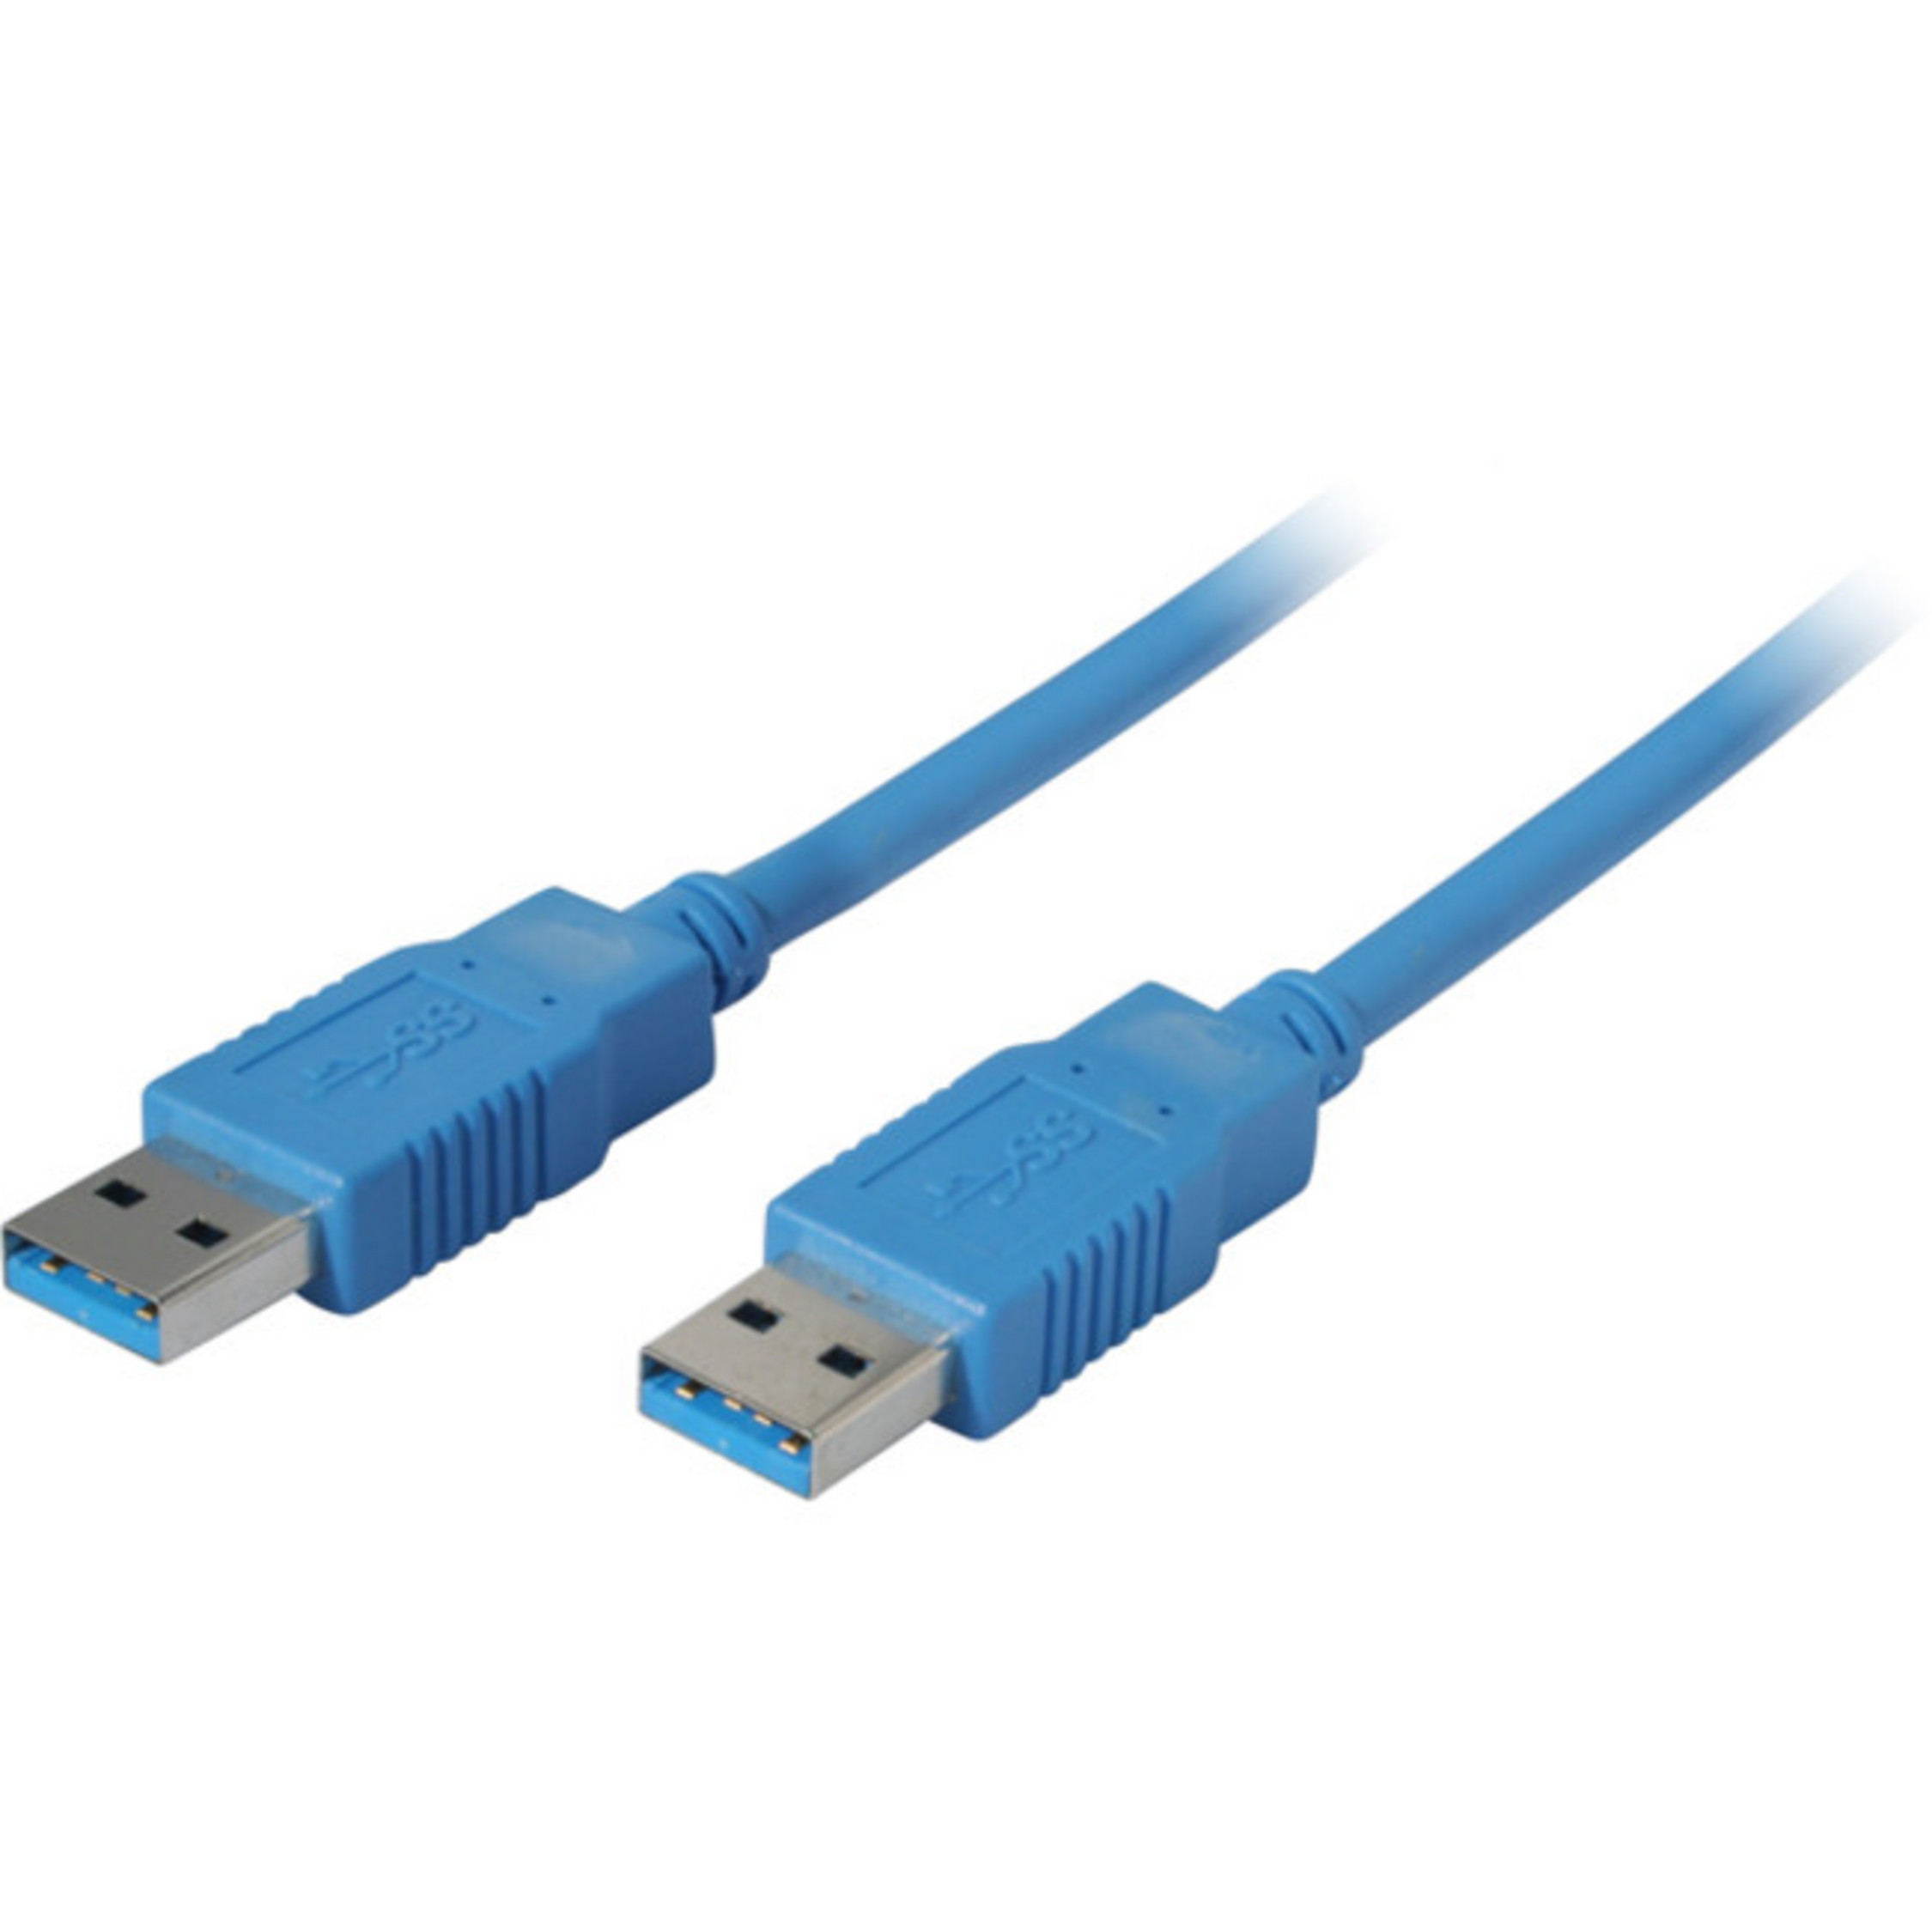 S/CONN MAXIMUM Stecker Kabel 5m blau / A Stecker CONNECTIVITY USB 3.0 USB USB A Kabel